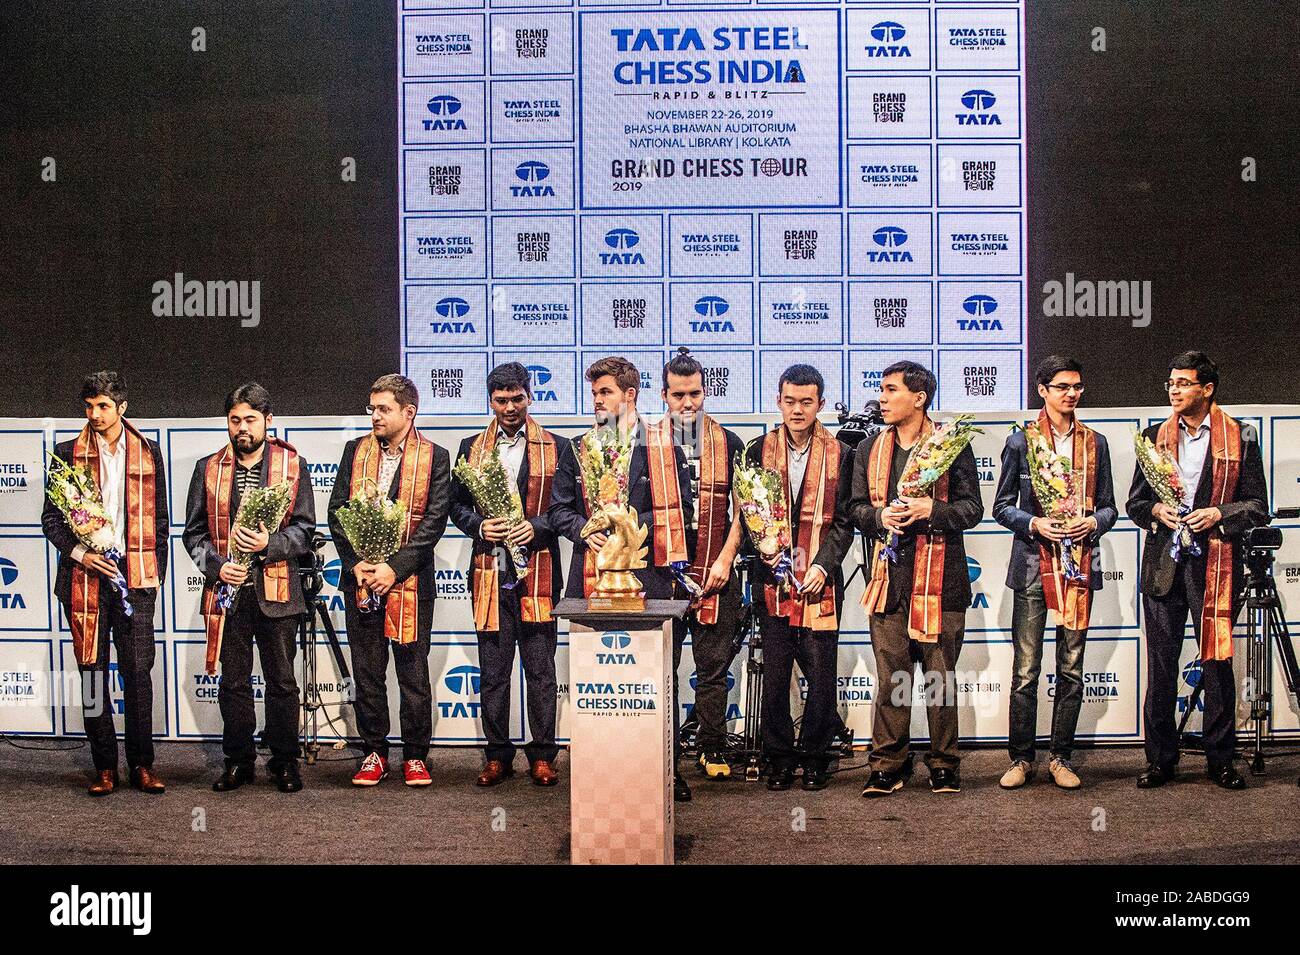 Ian Nepomniachtchi Starts Tata Steel Masters with Win